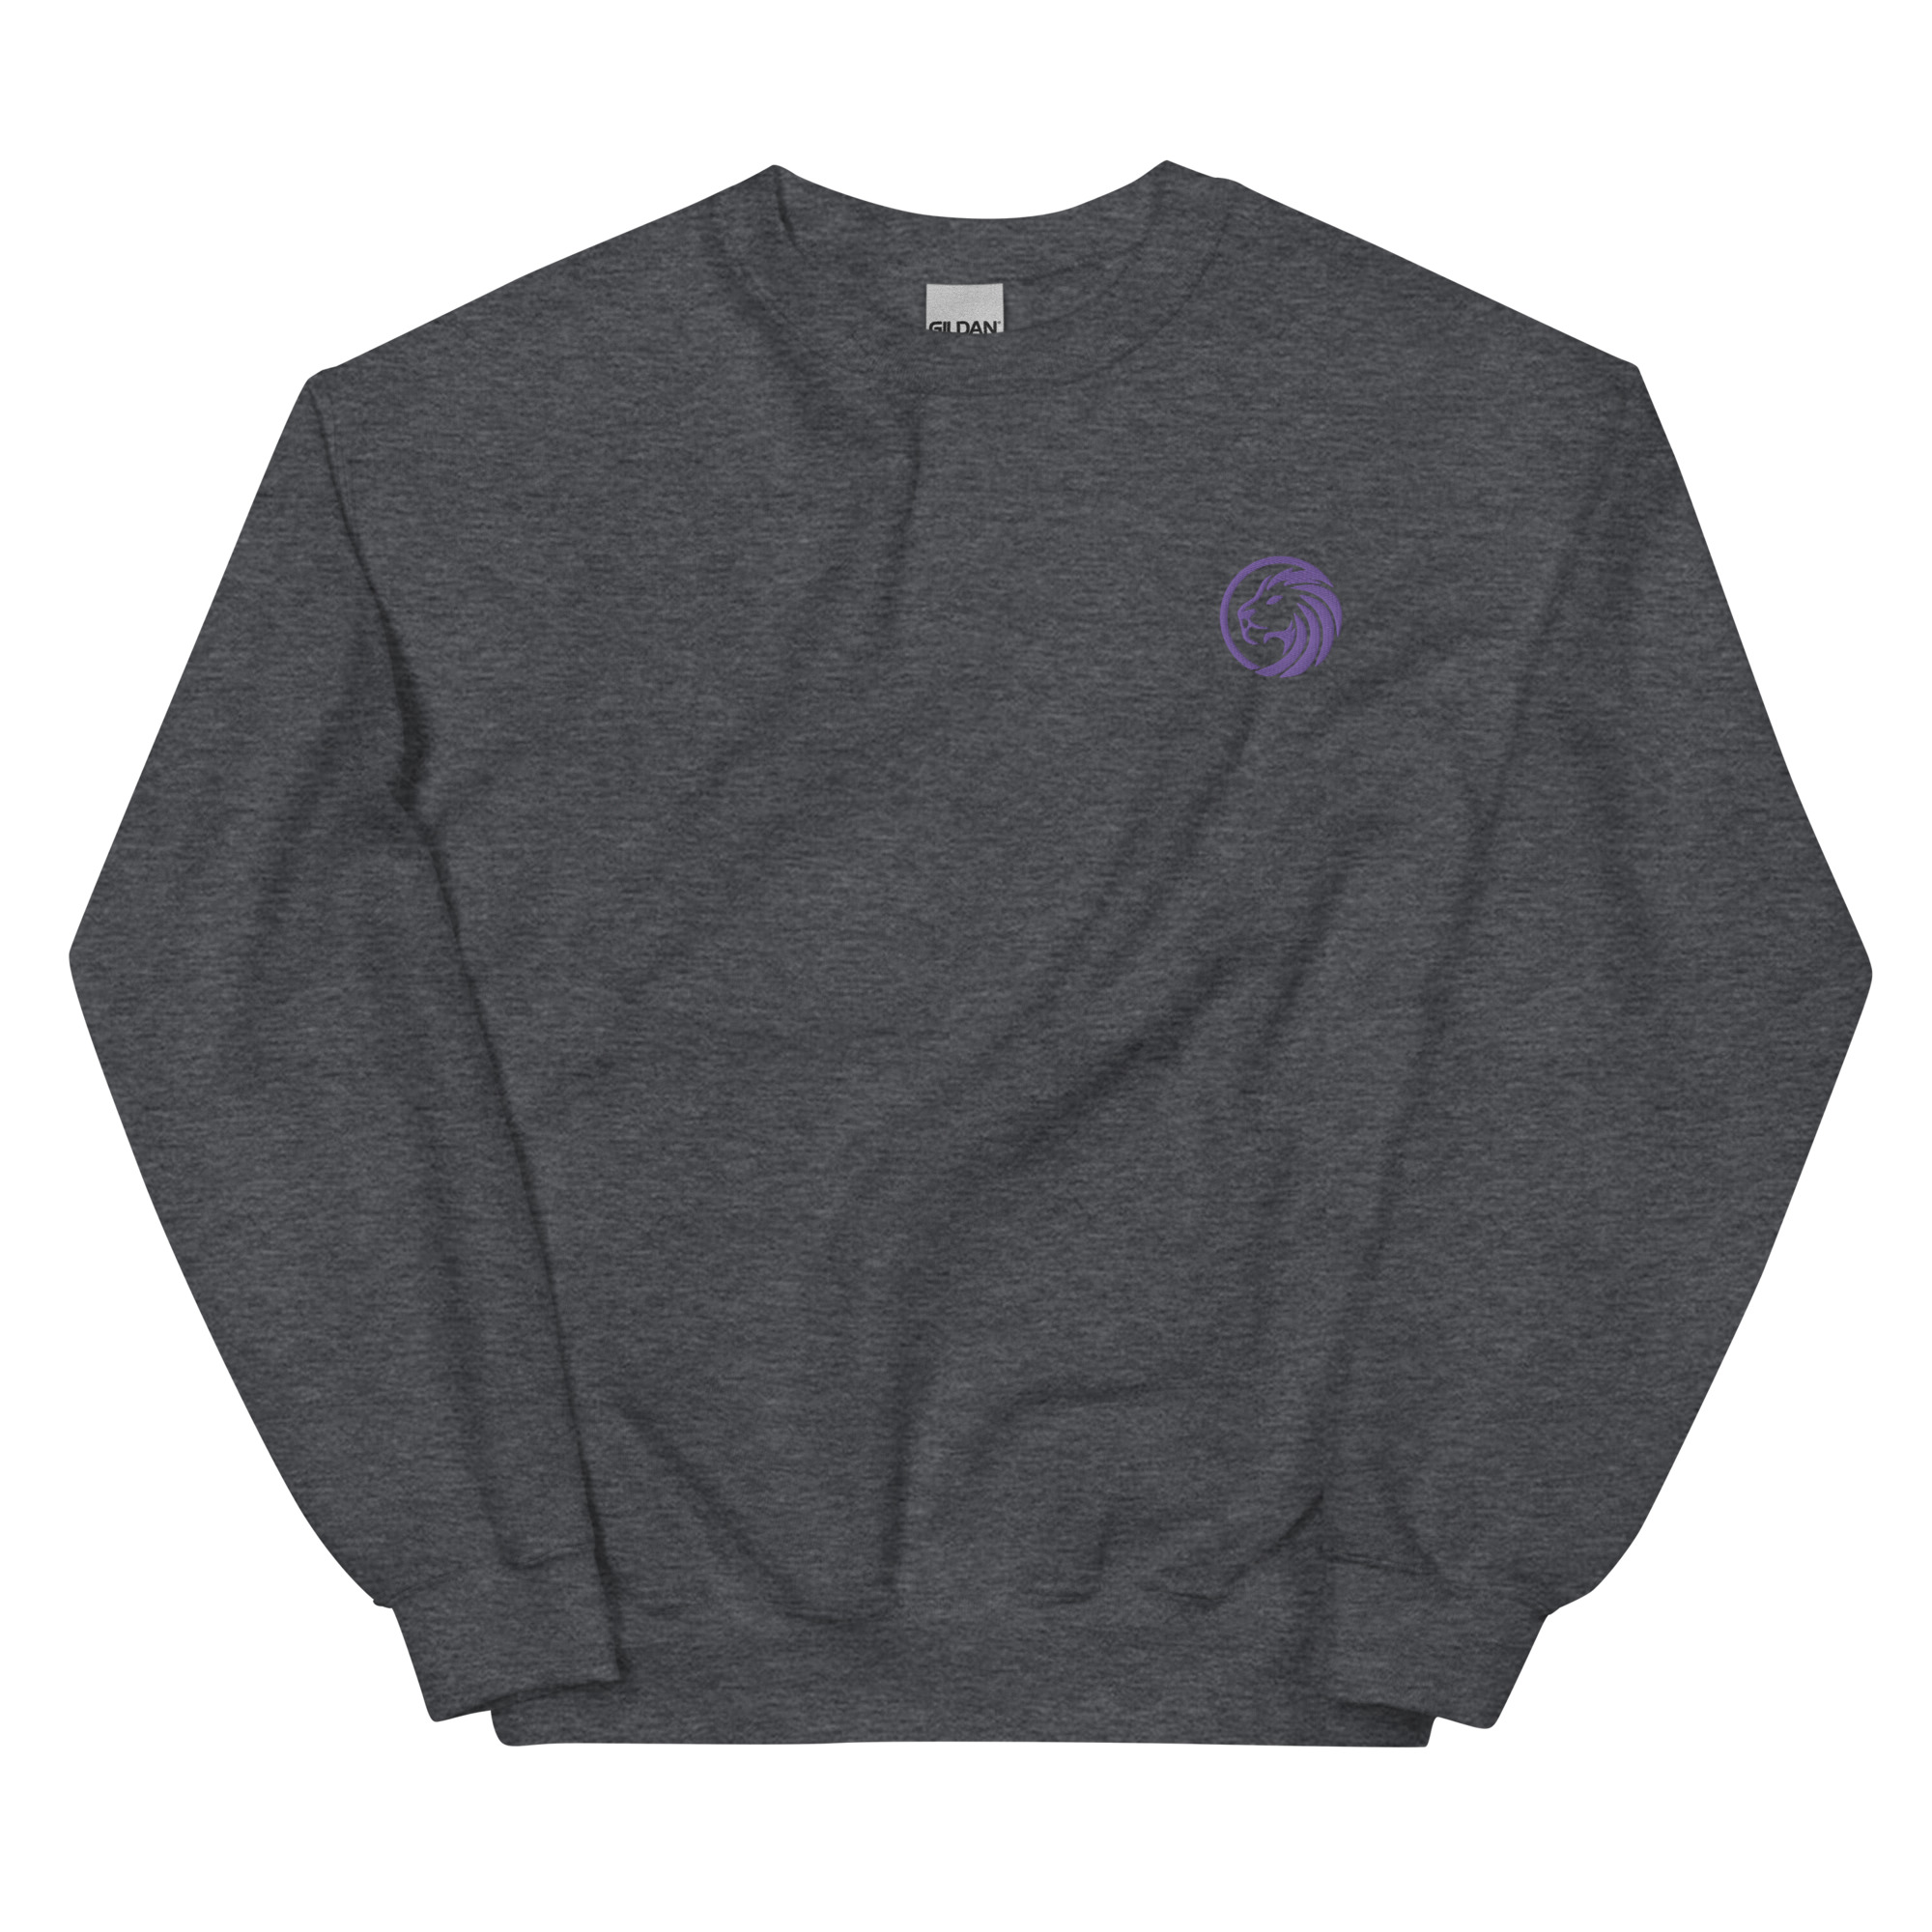 Boulevard Society embroided dark heather sweatshirt